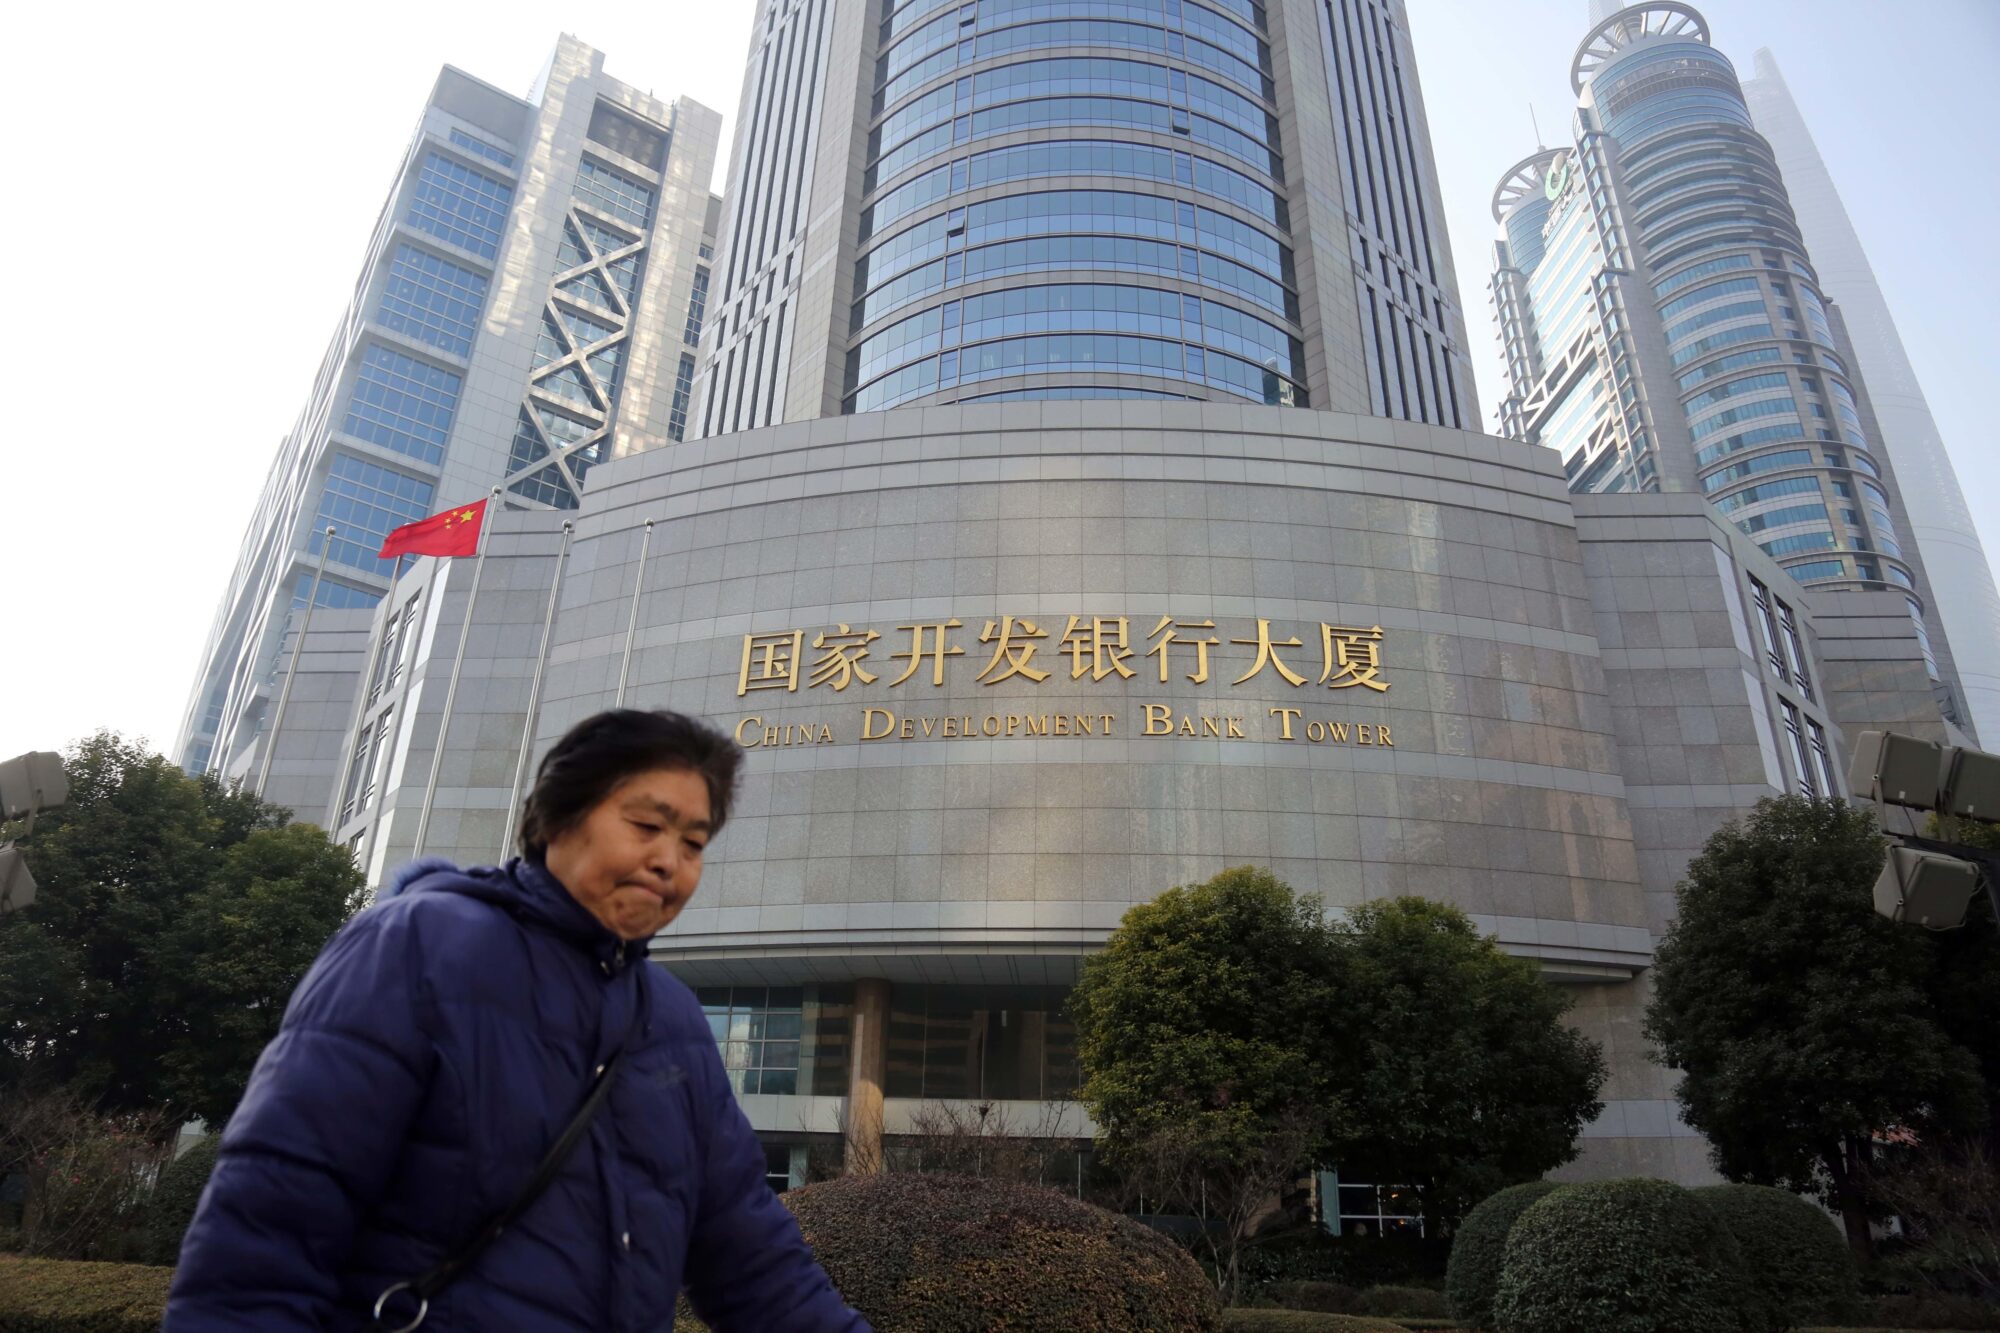 Una mujer caminando delante del edificio del China Development Bank